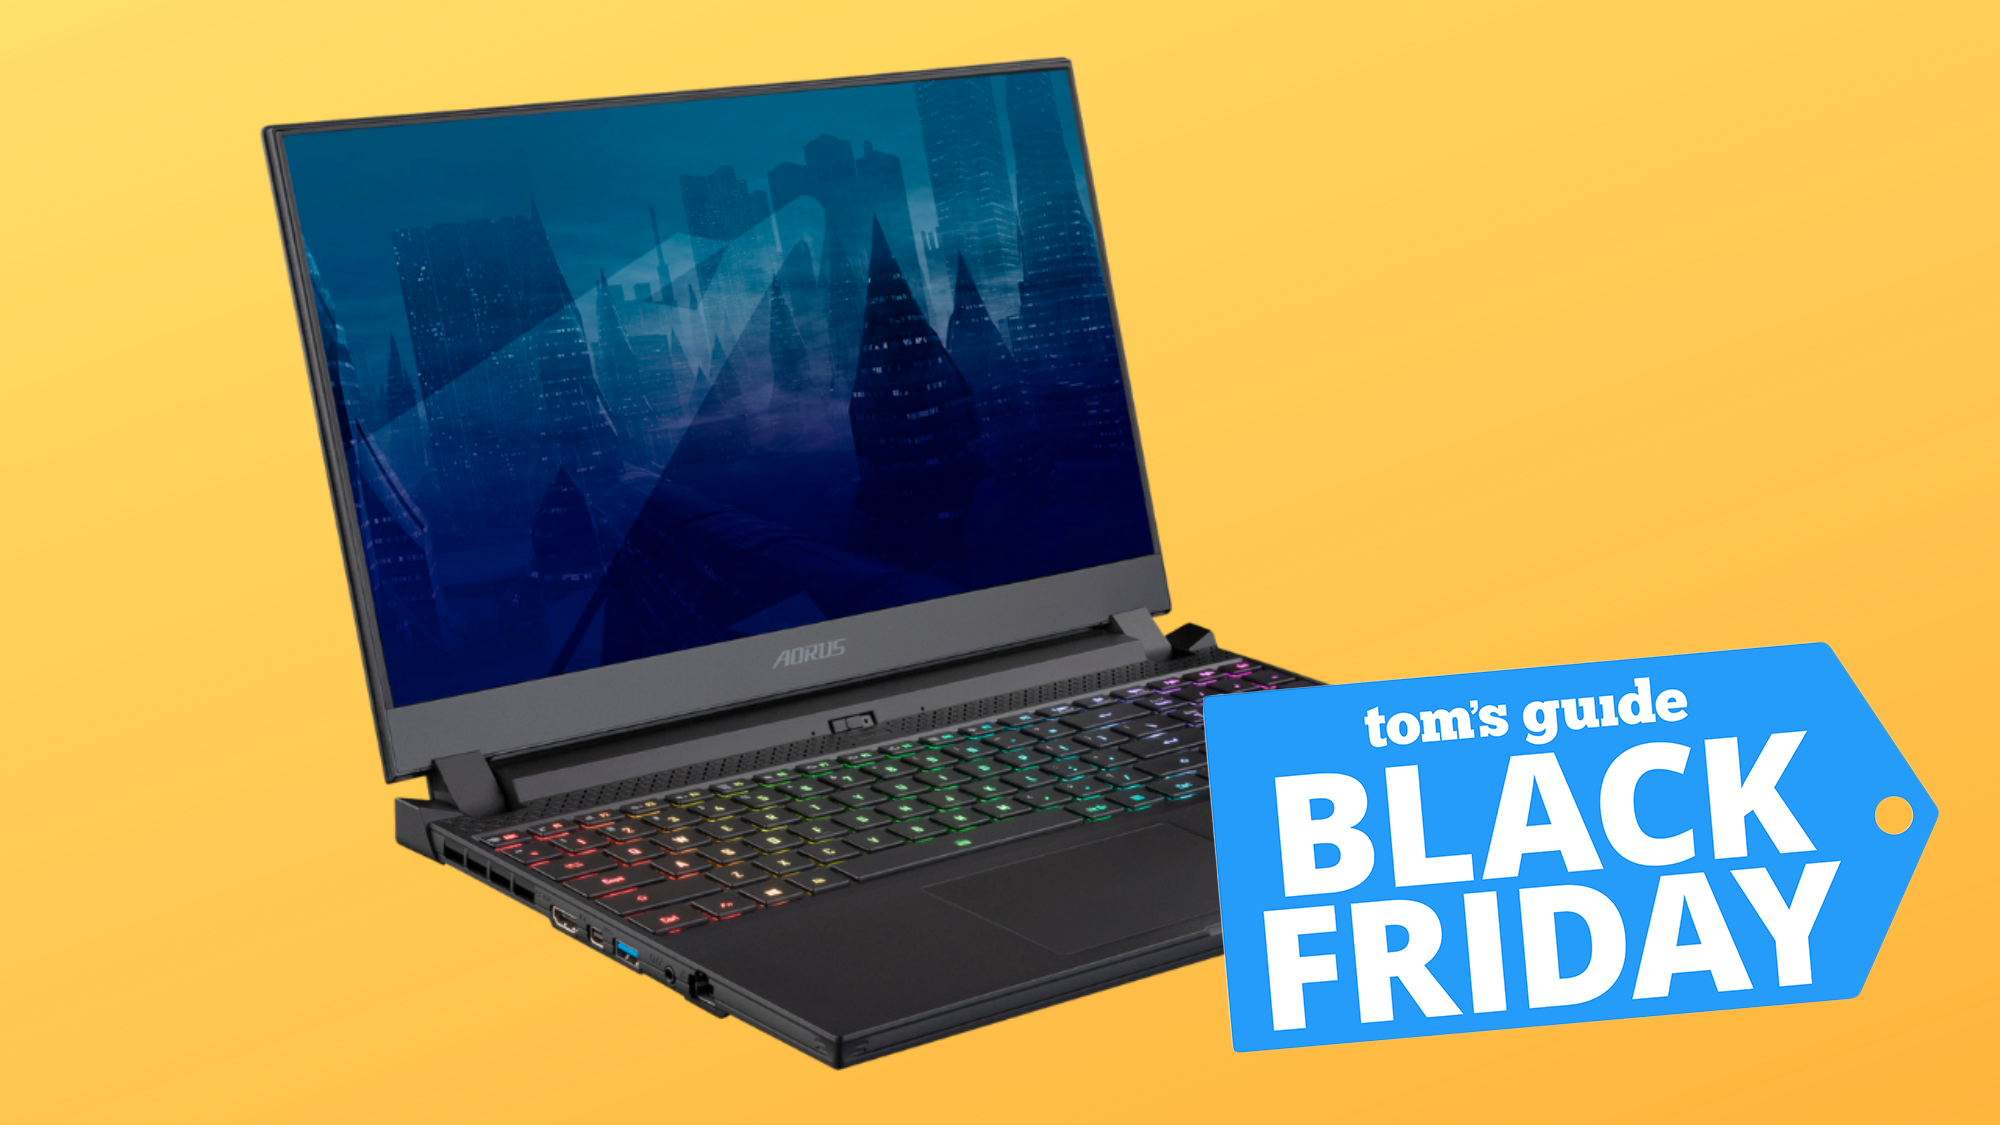 Gigabyte Aorus 15P Black Friday gaming laptop deal